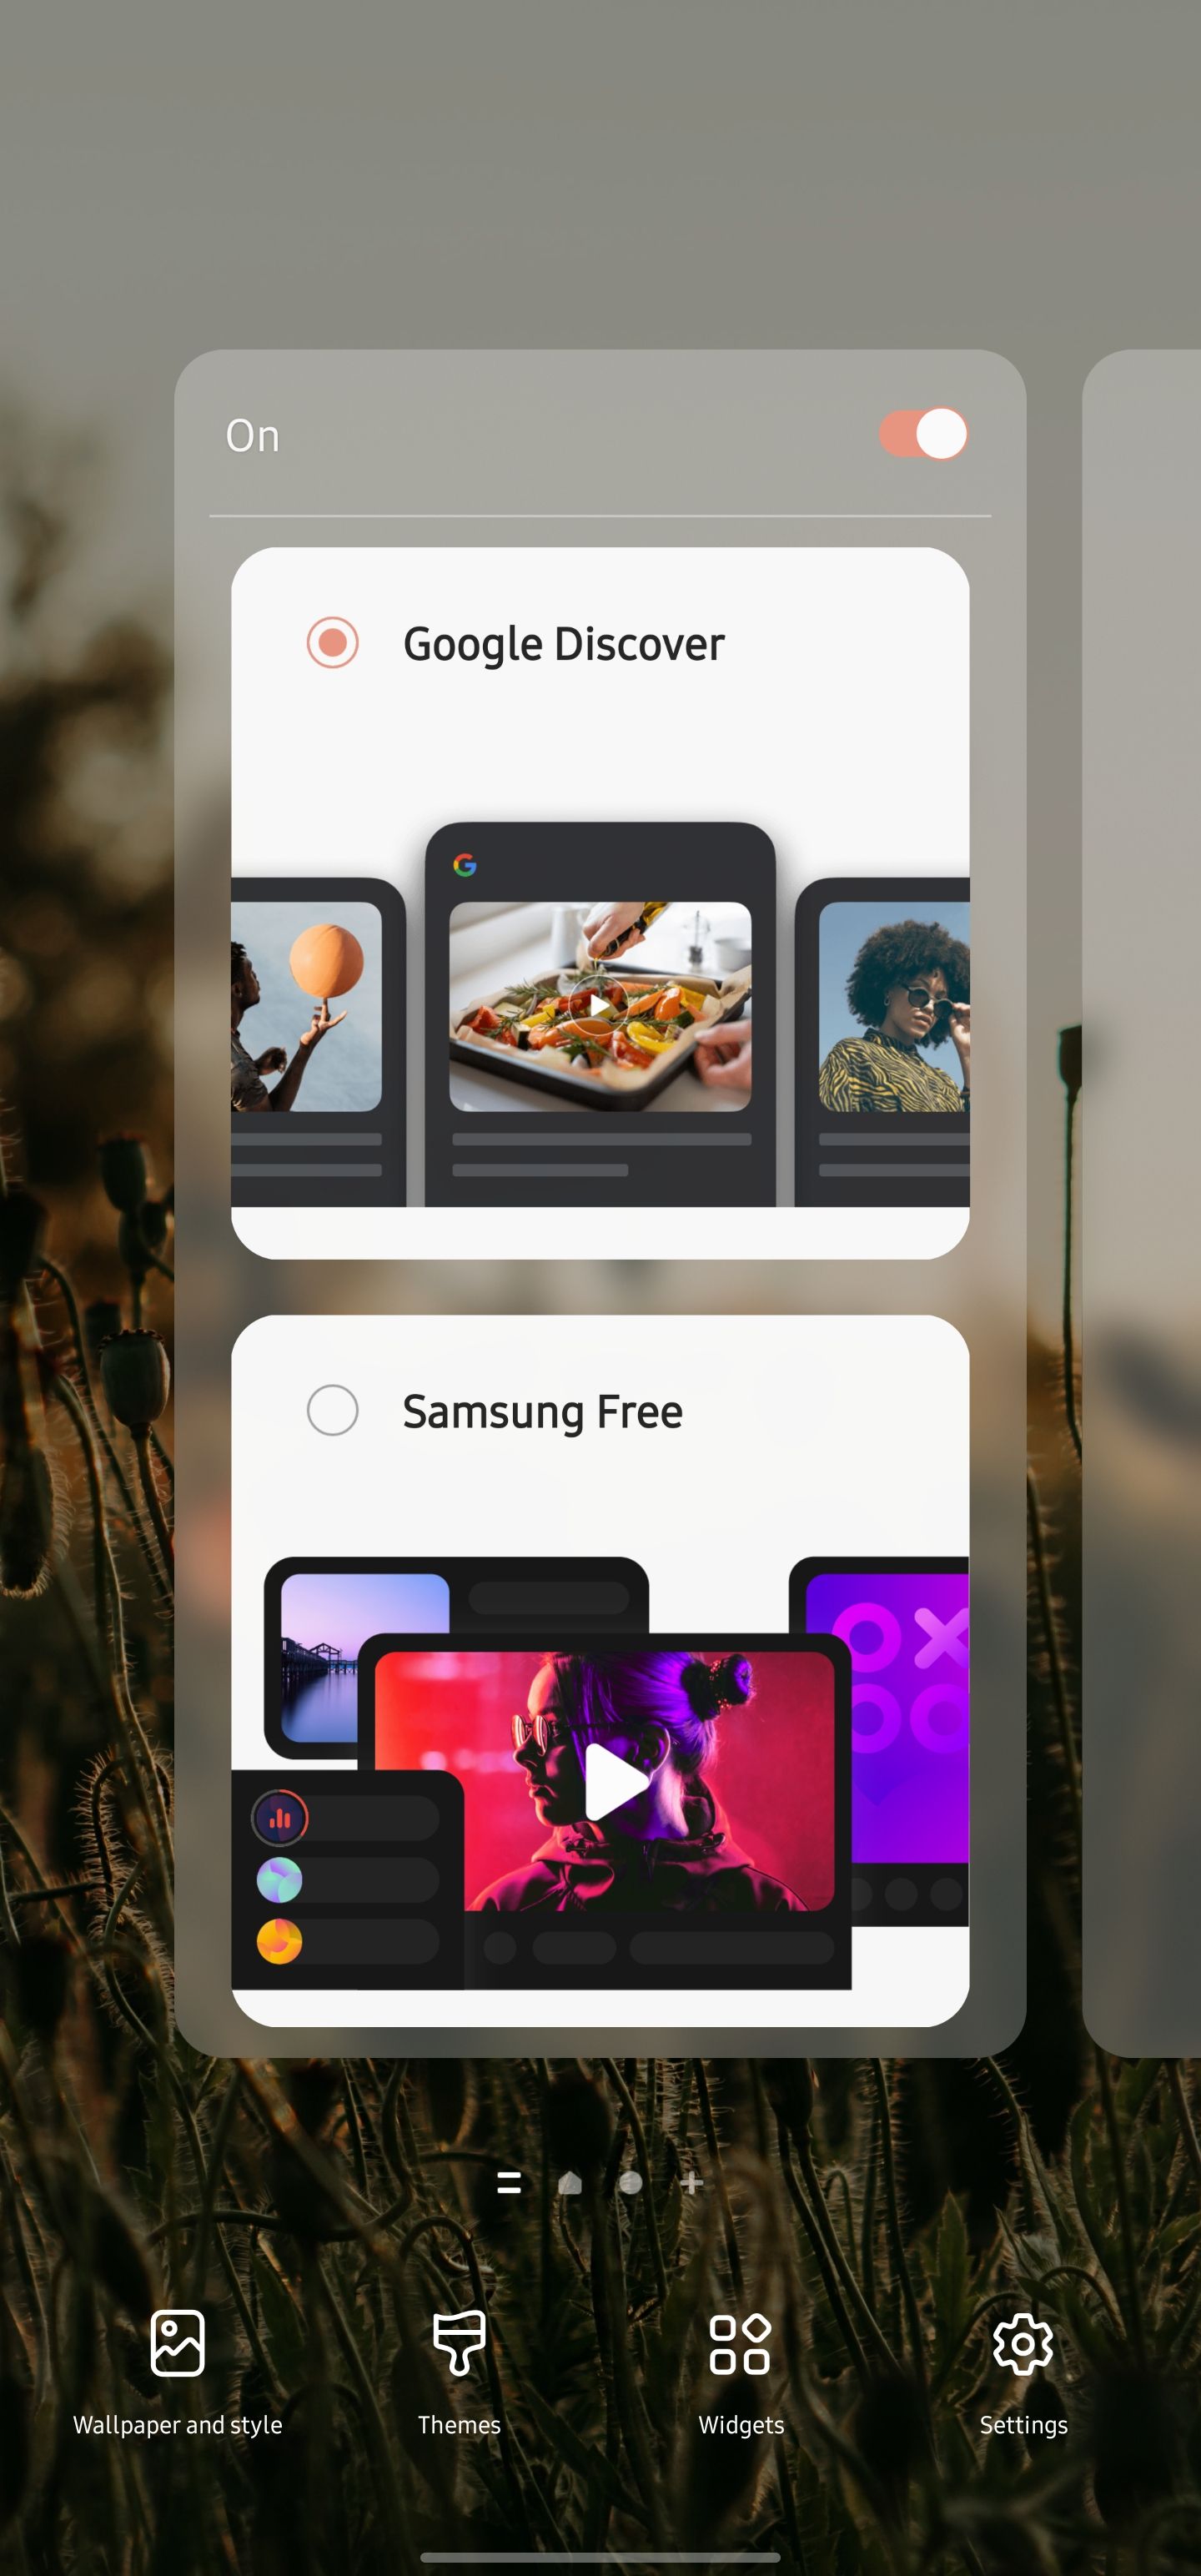 Samsung Google Discover/Samsung Free homescreen panel setting